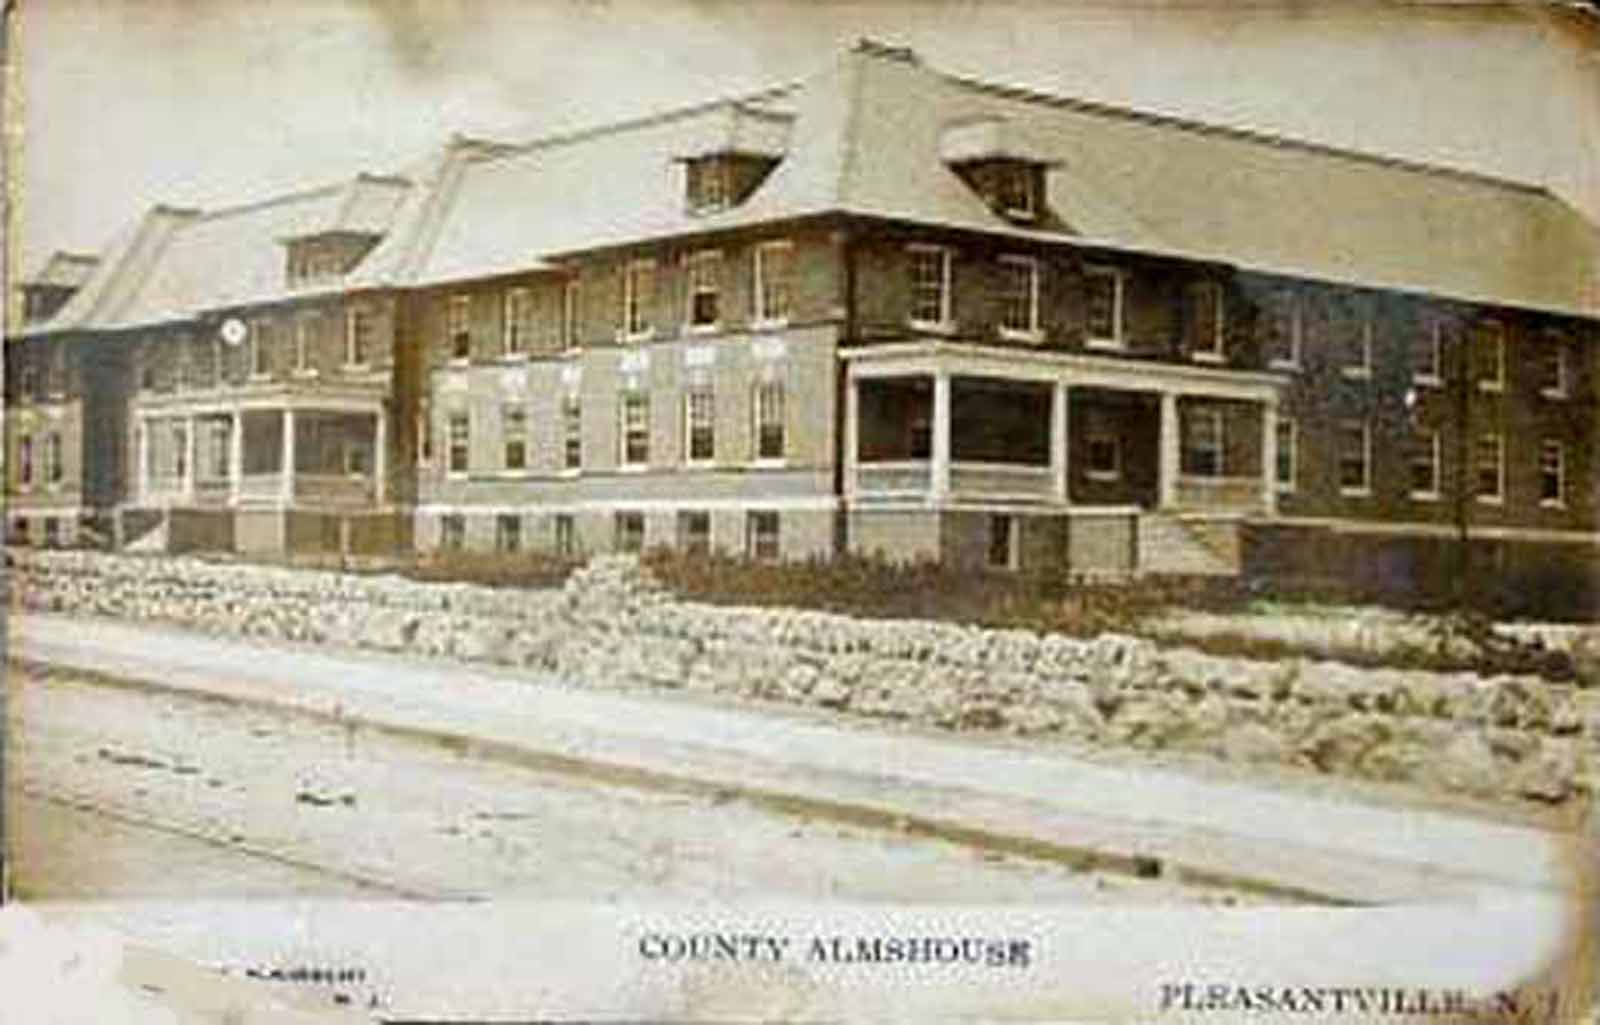 Pleasantville - Atlantic County Almshouse - 1910